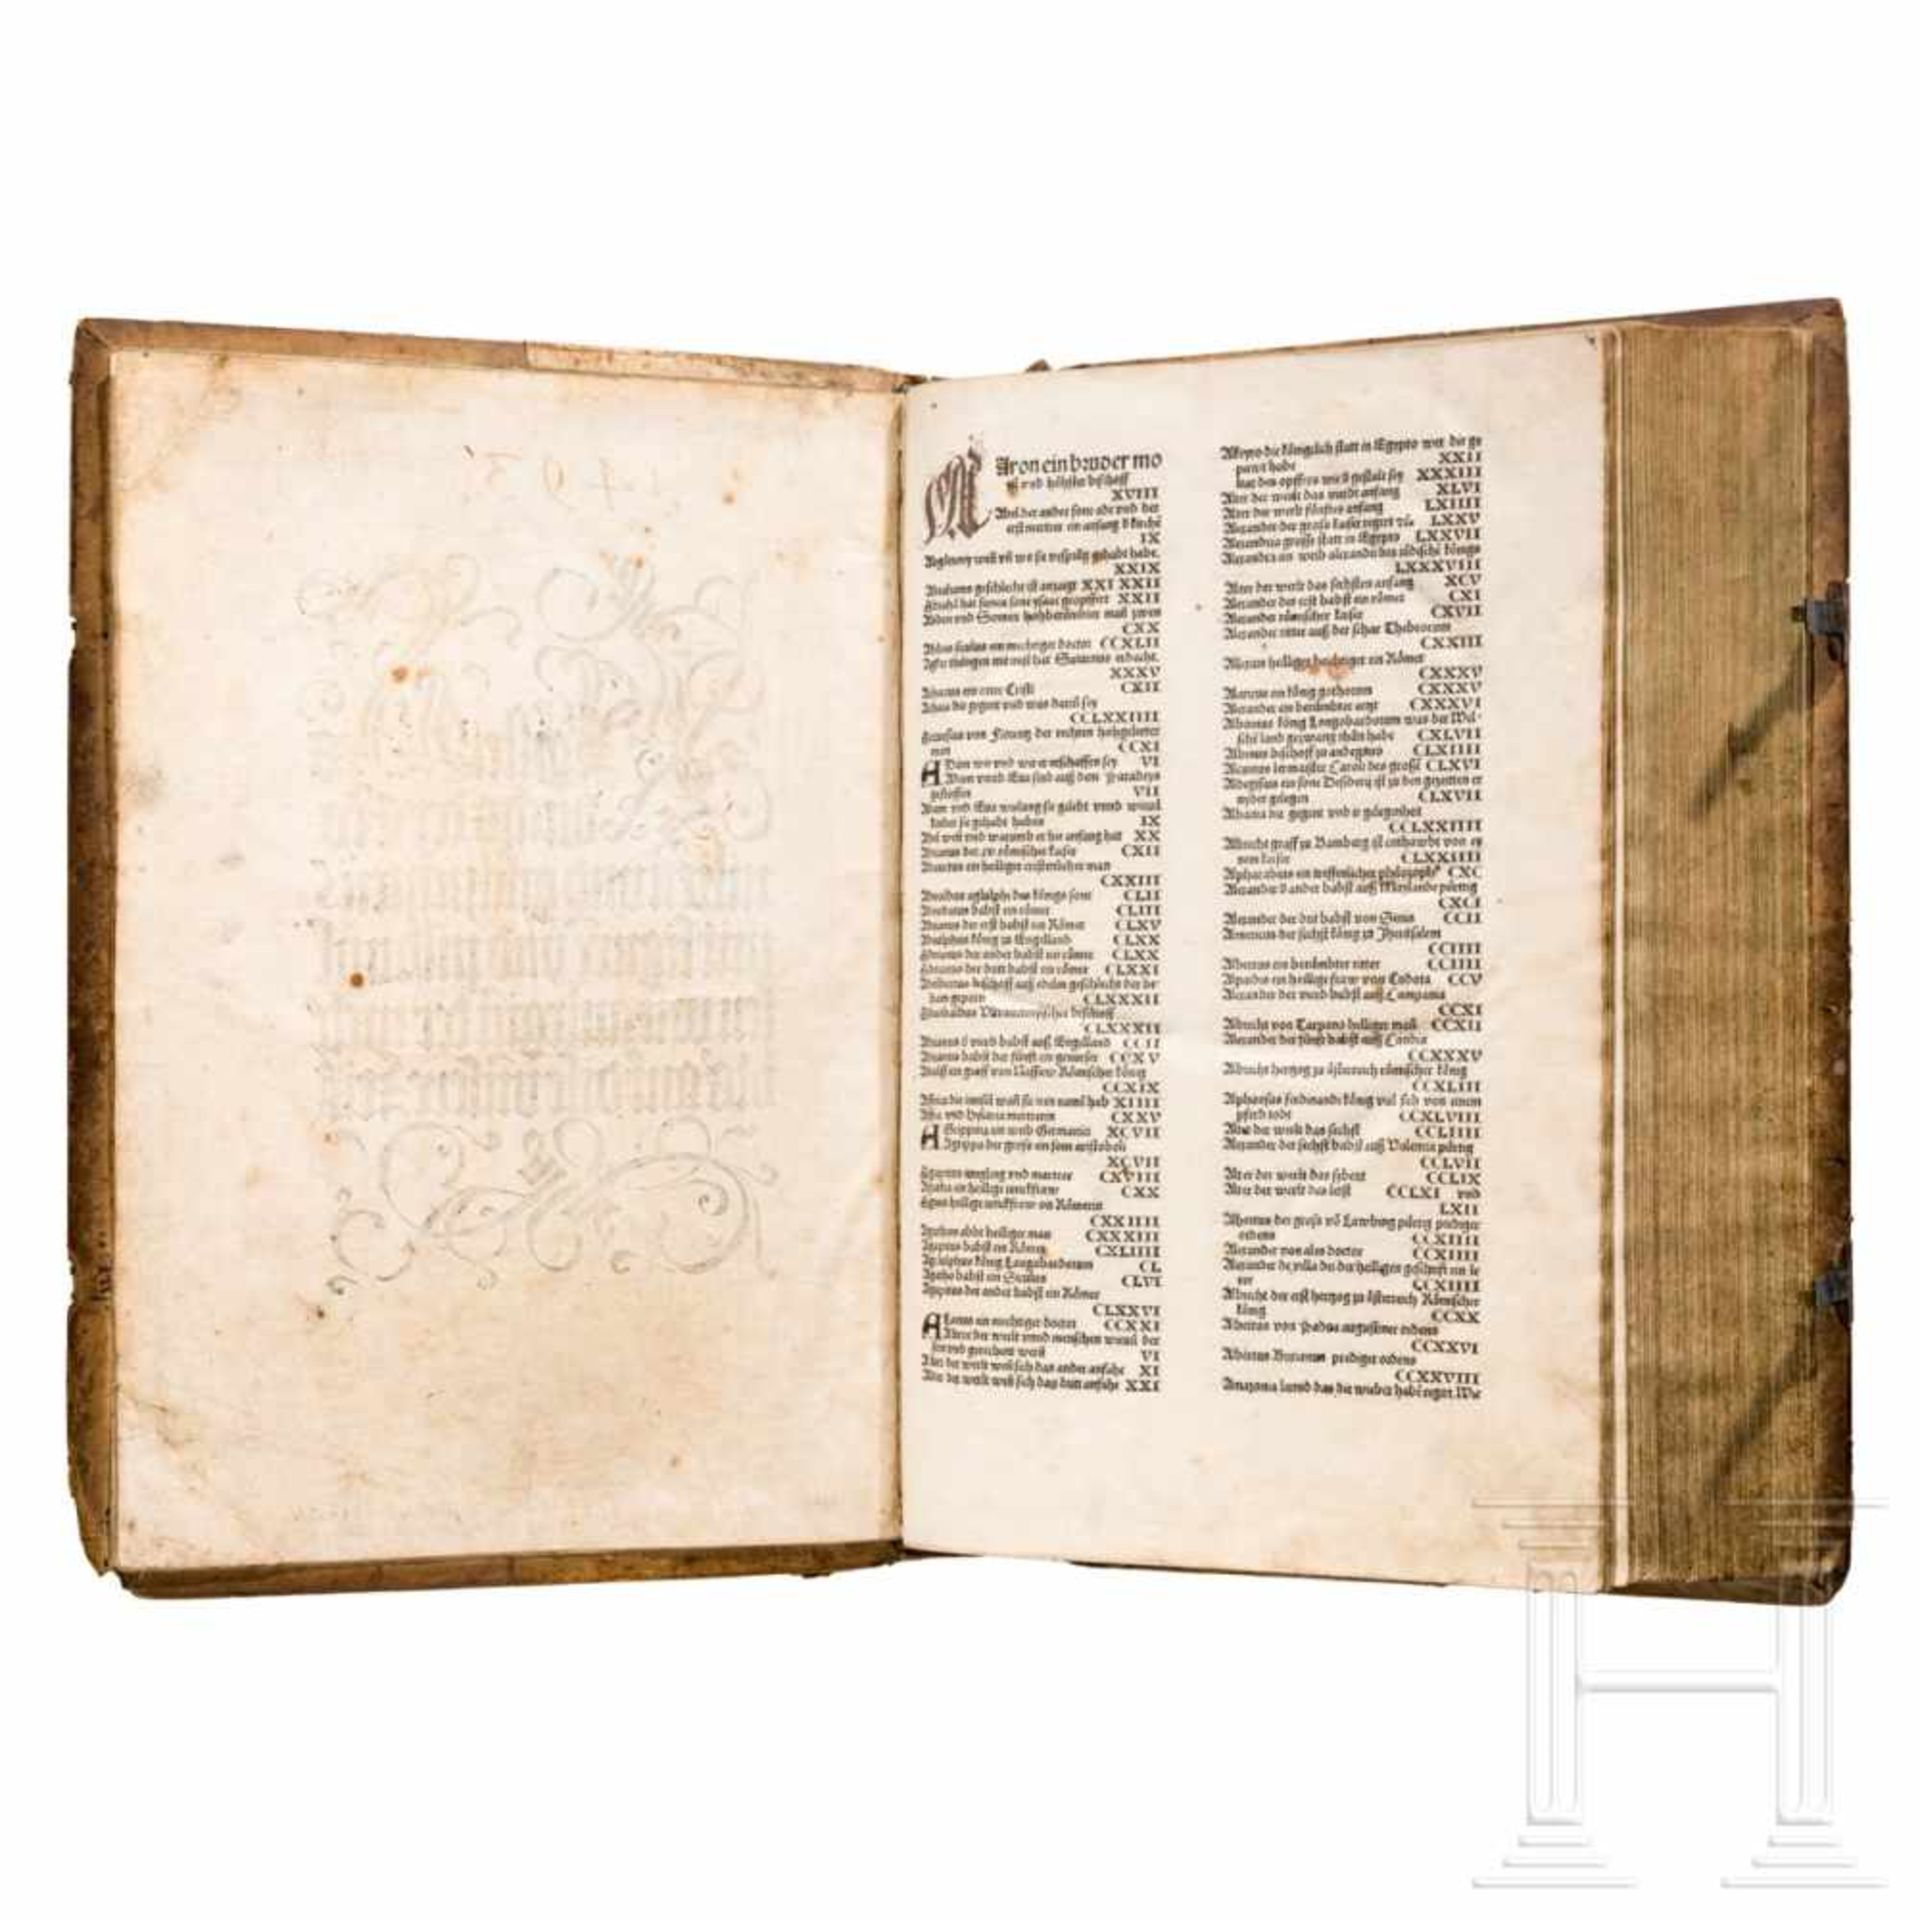 Hartmann Schedel, Das Buch der Chroniken, Nürnberg, A. Koberger, 1493 - Image 43 of 51